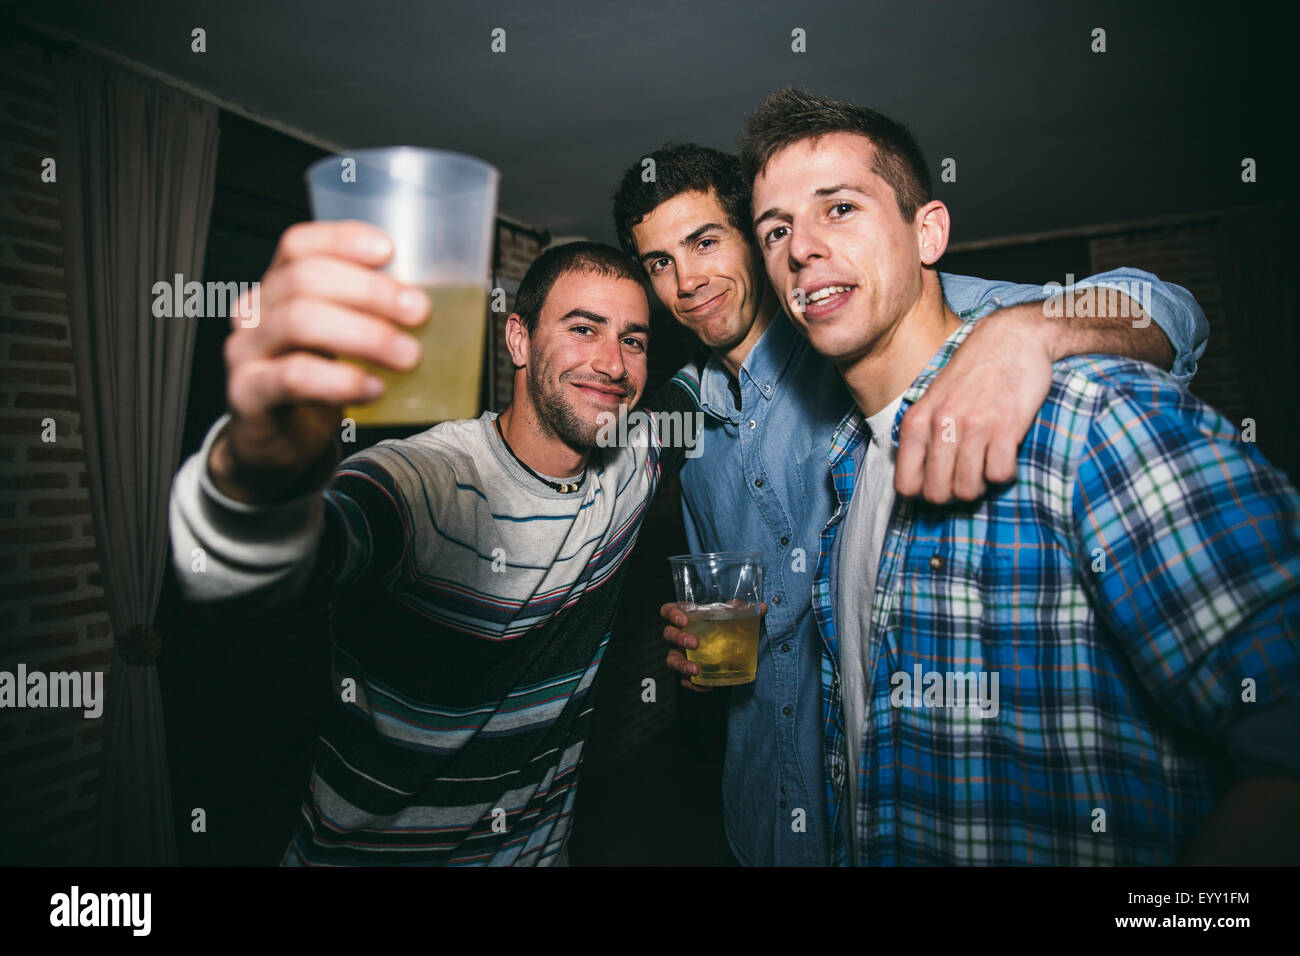 Smiling men drinking in nightclub Stock Photo